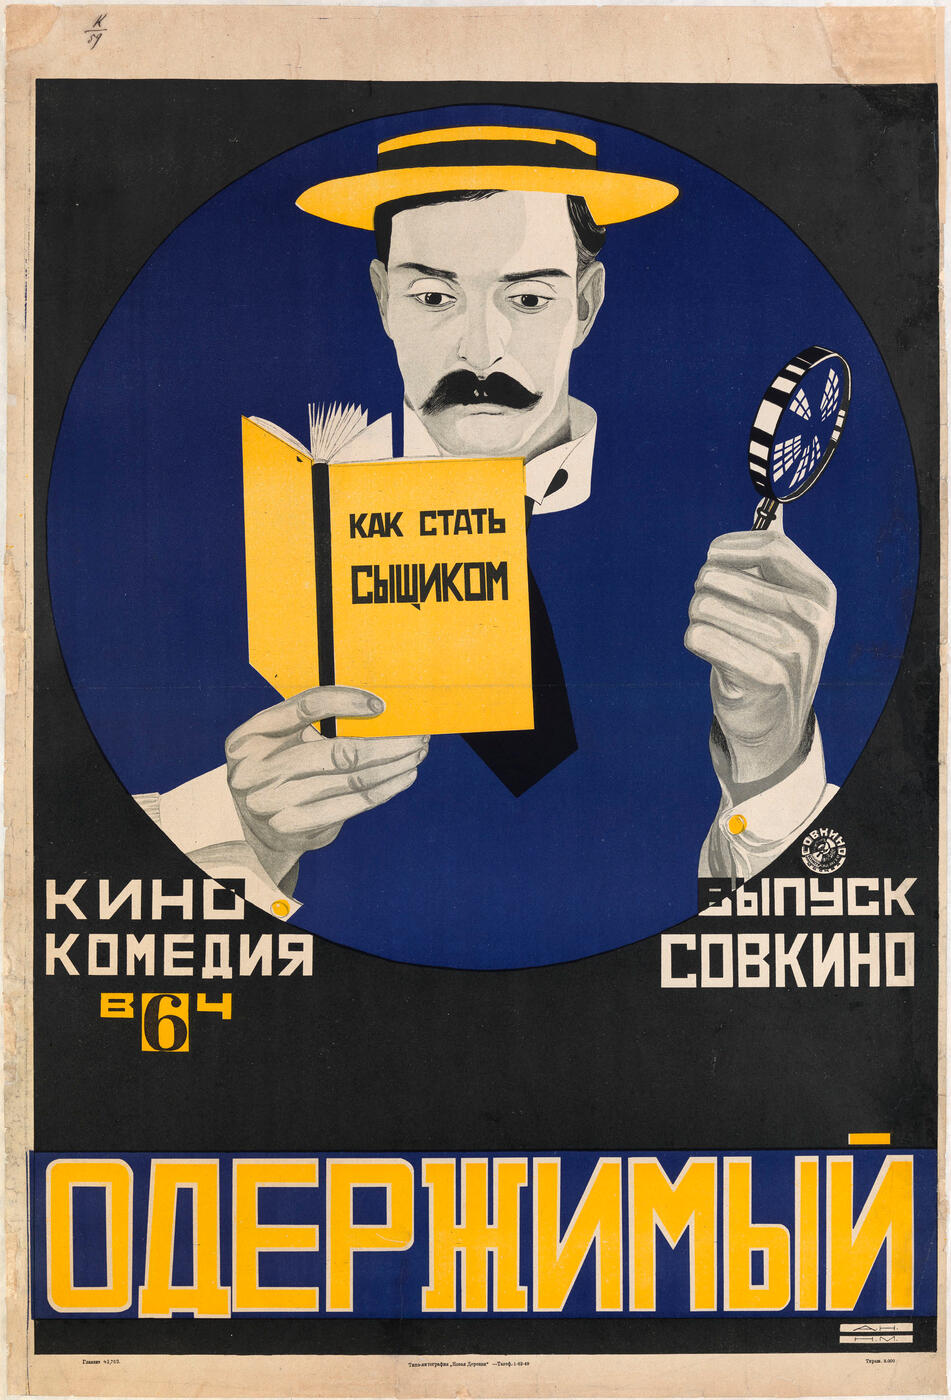 Poster for the B. Keaton Film “Oderzhimyi”